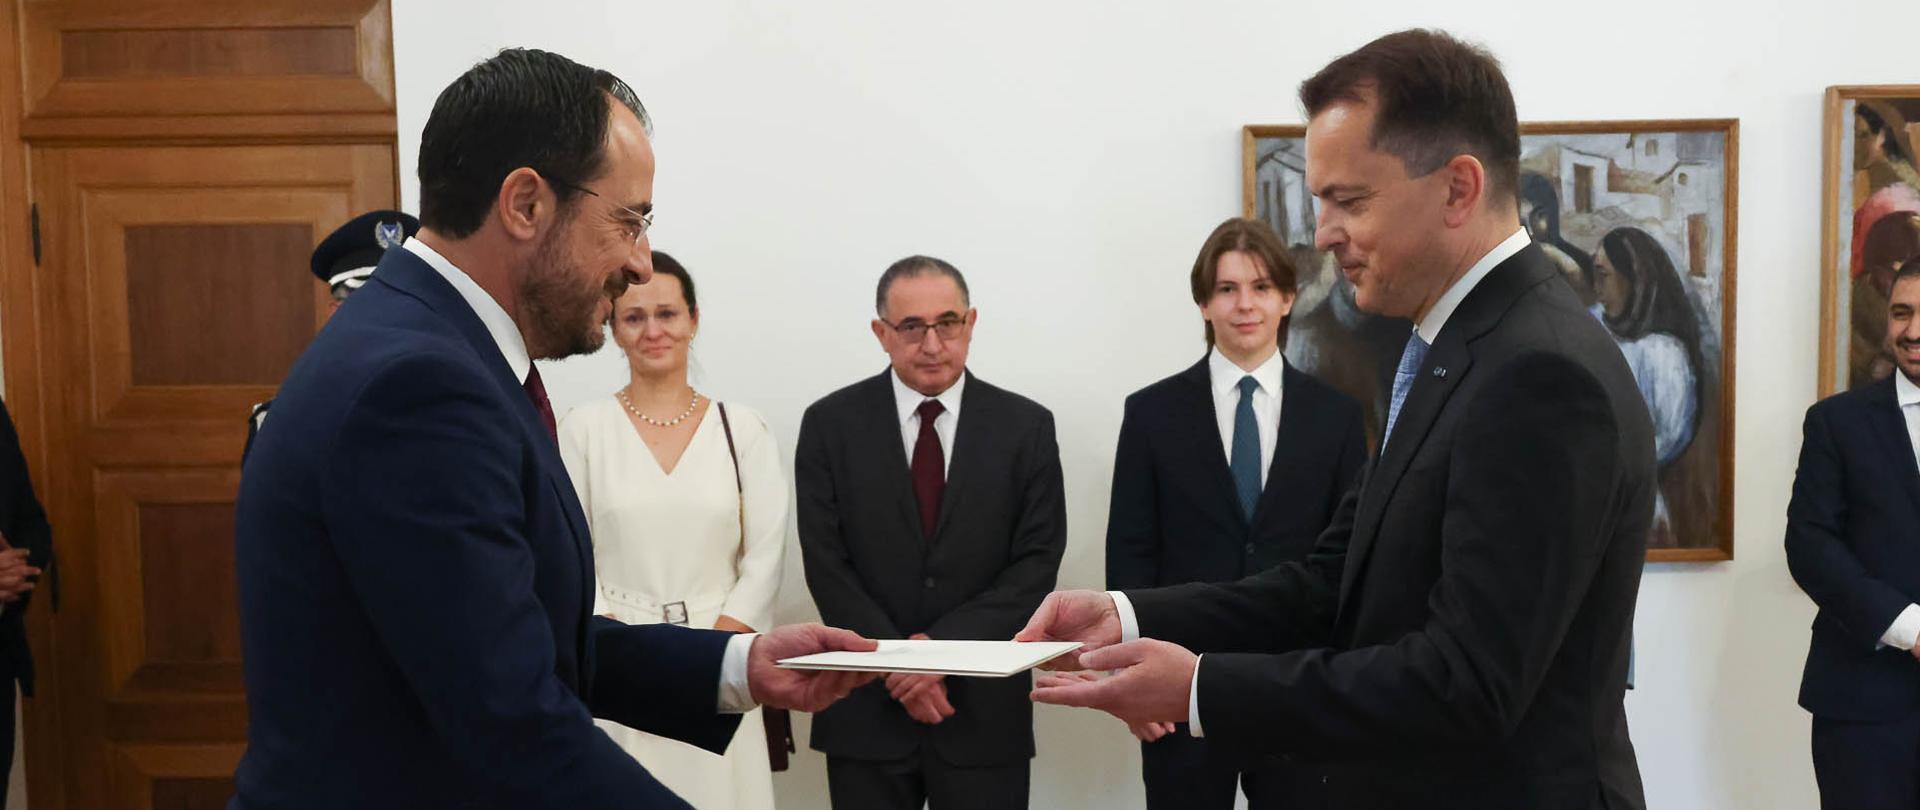 Ambassador Marek Szczepanowski presents the Letters of Credence to the President of the Republic of Cyprus Nikos Christodoulides